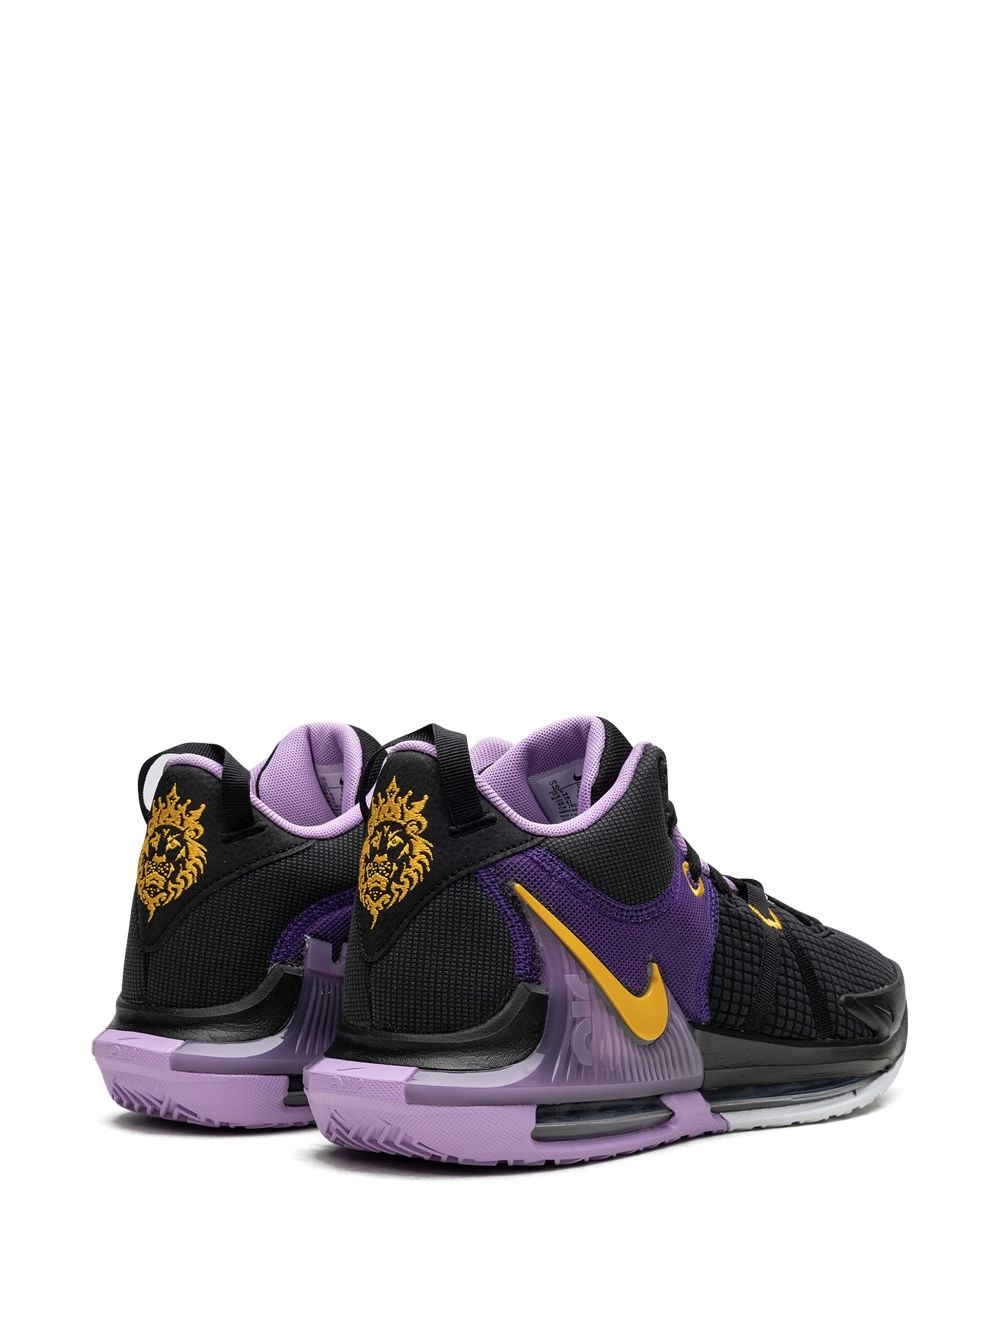 Lebron Witness VII "Lakers" sneakers - 3